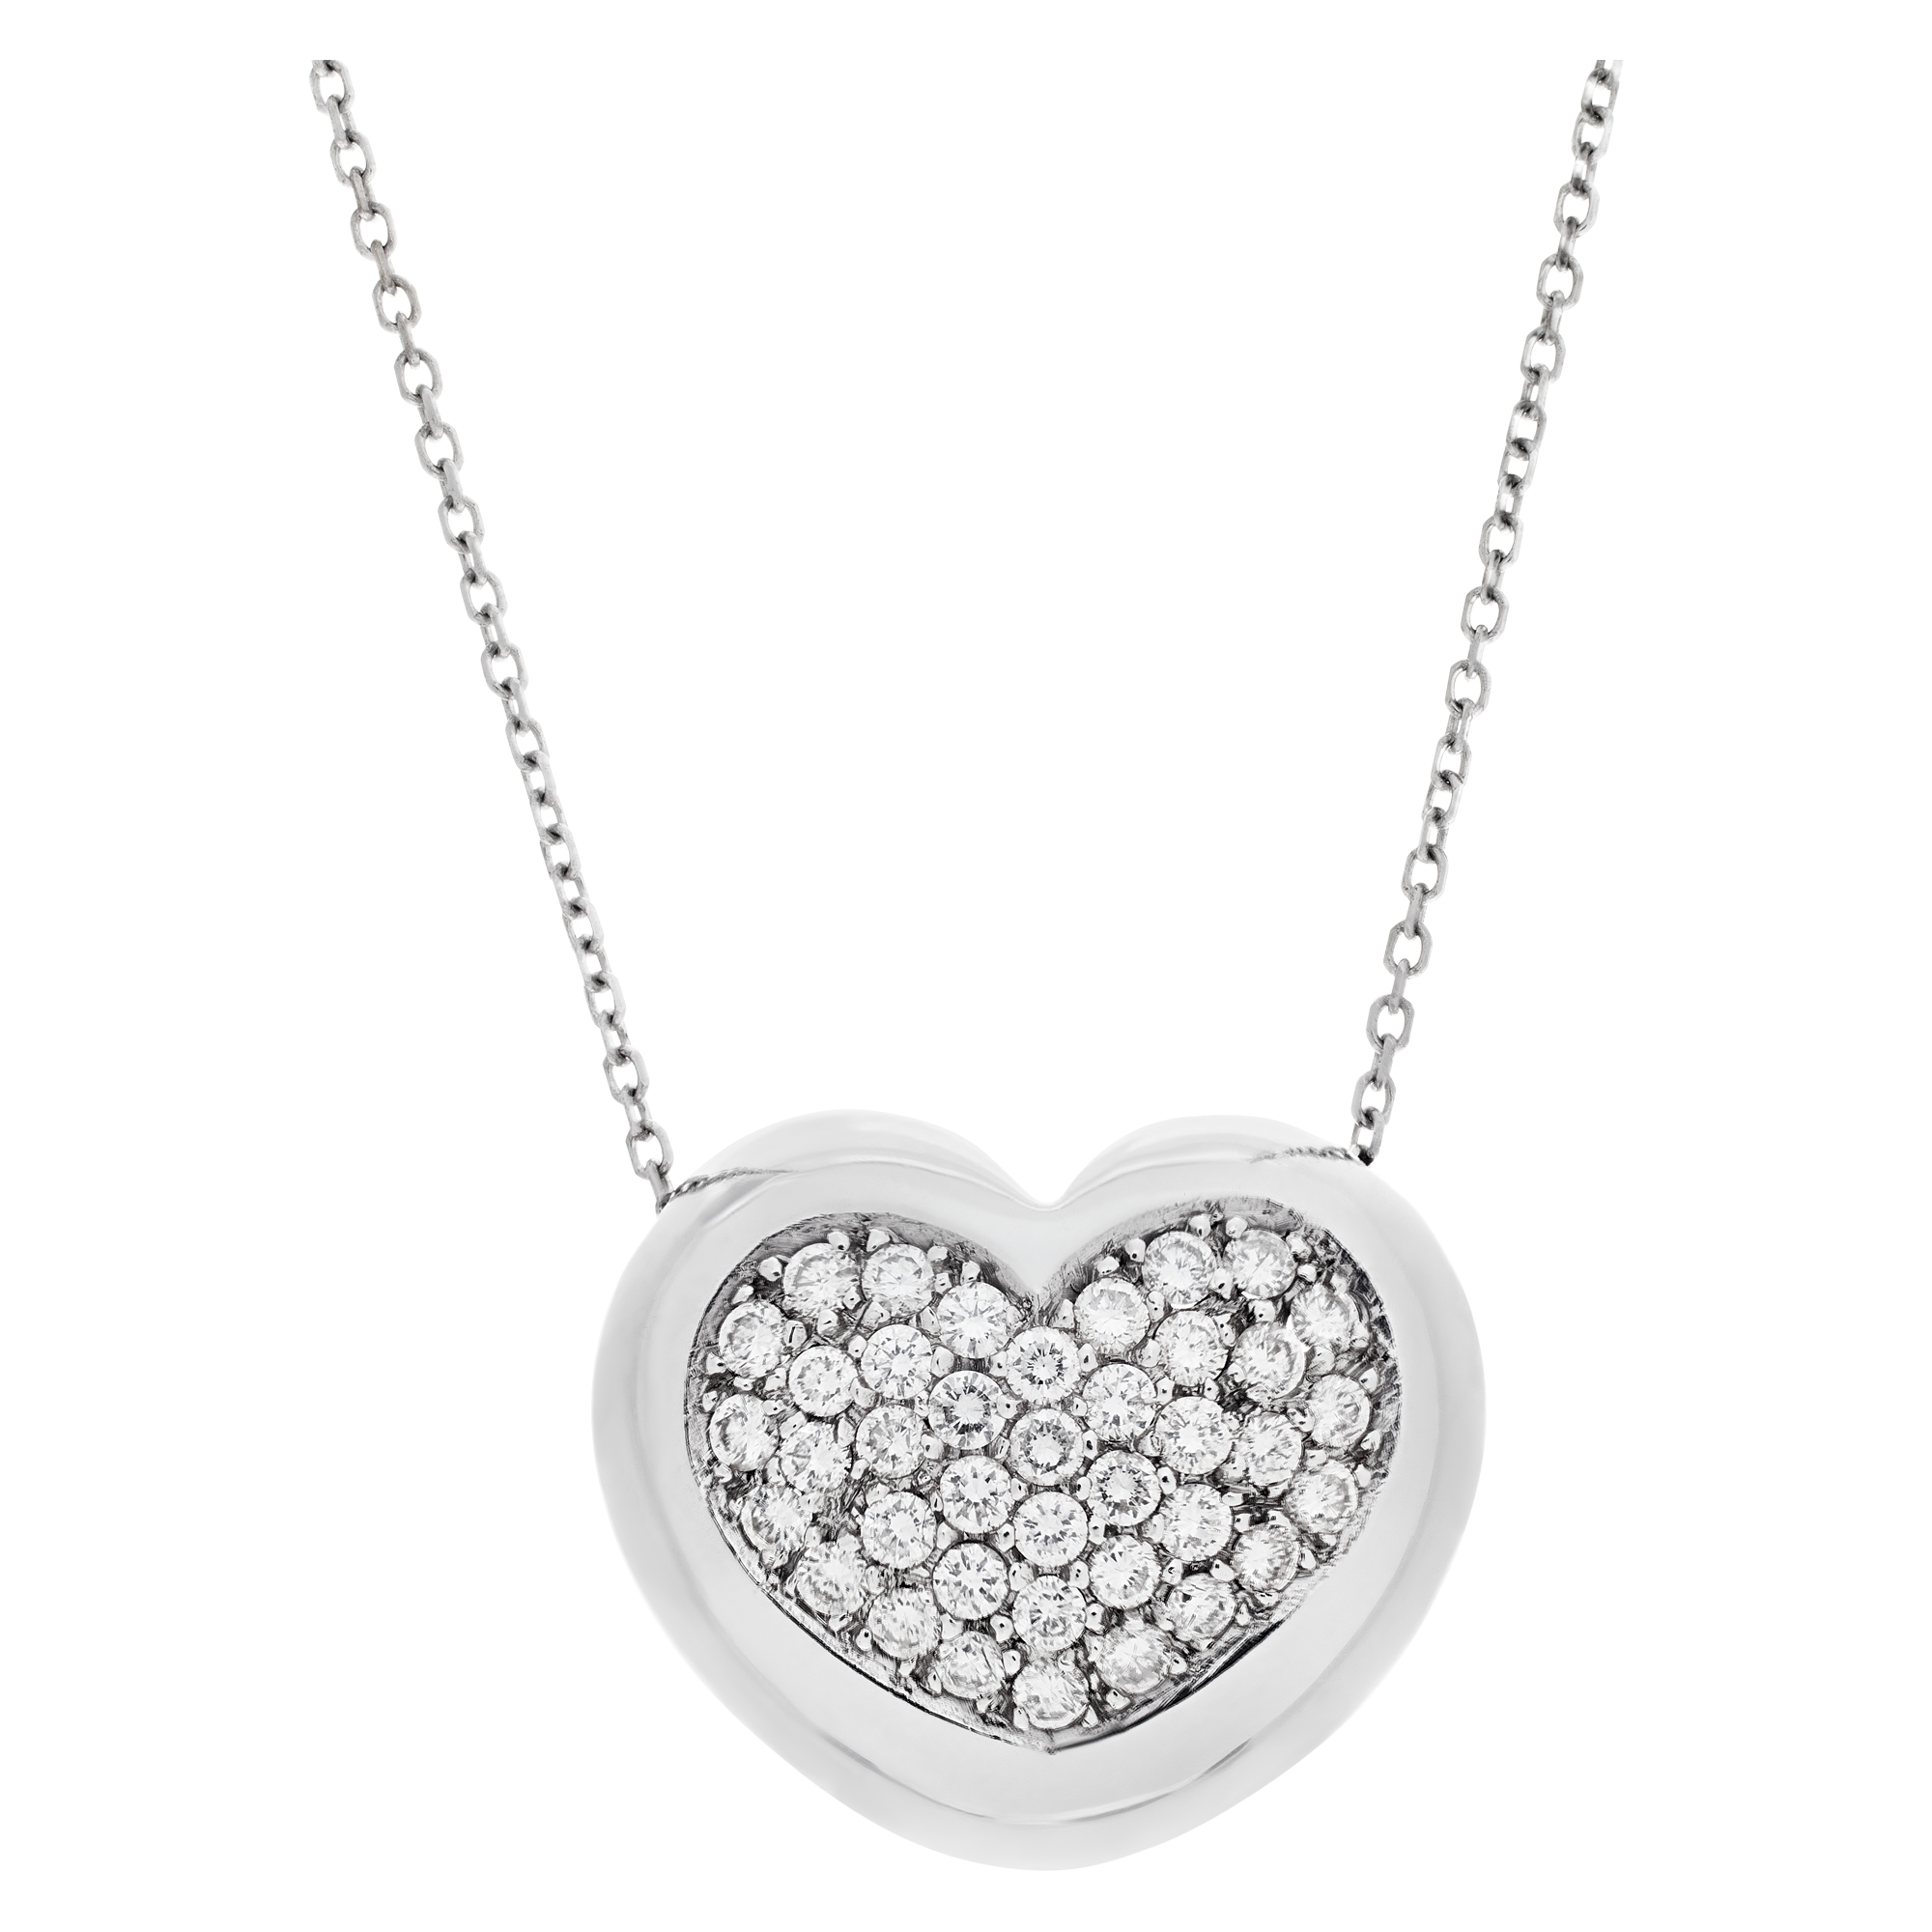 Pave diamond heart pendant and chain image 1